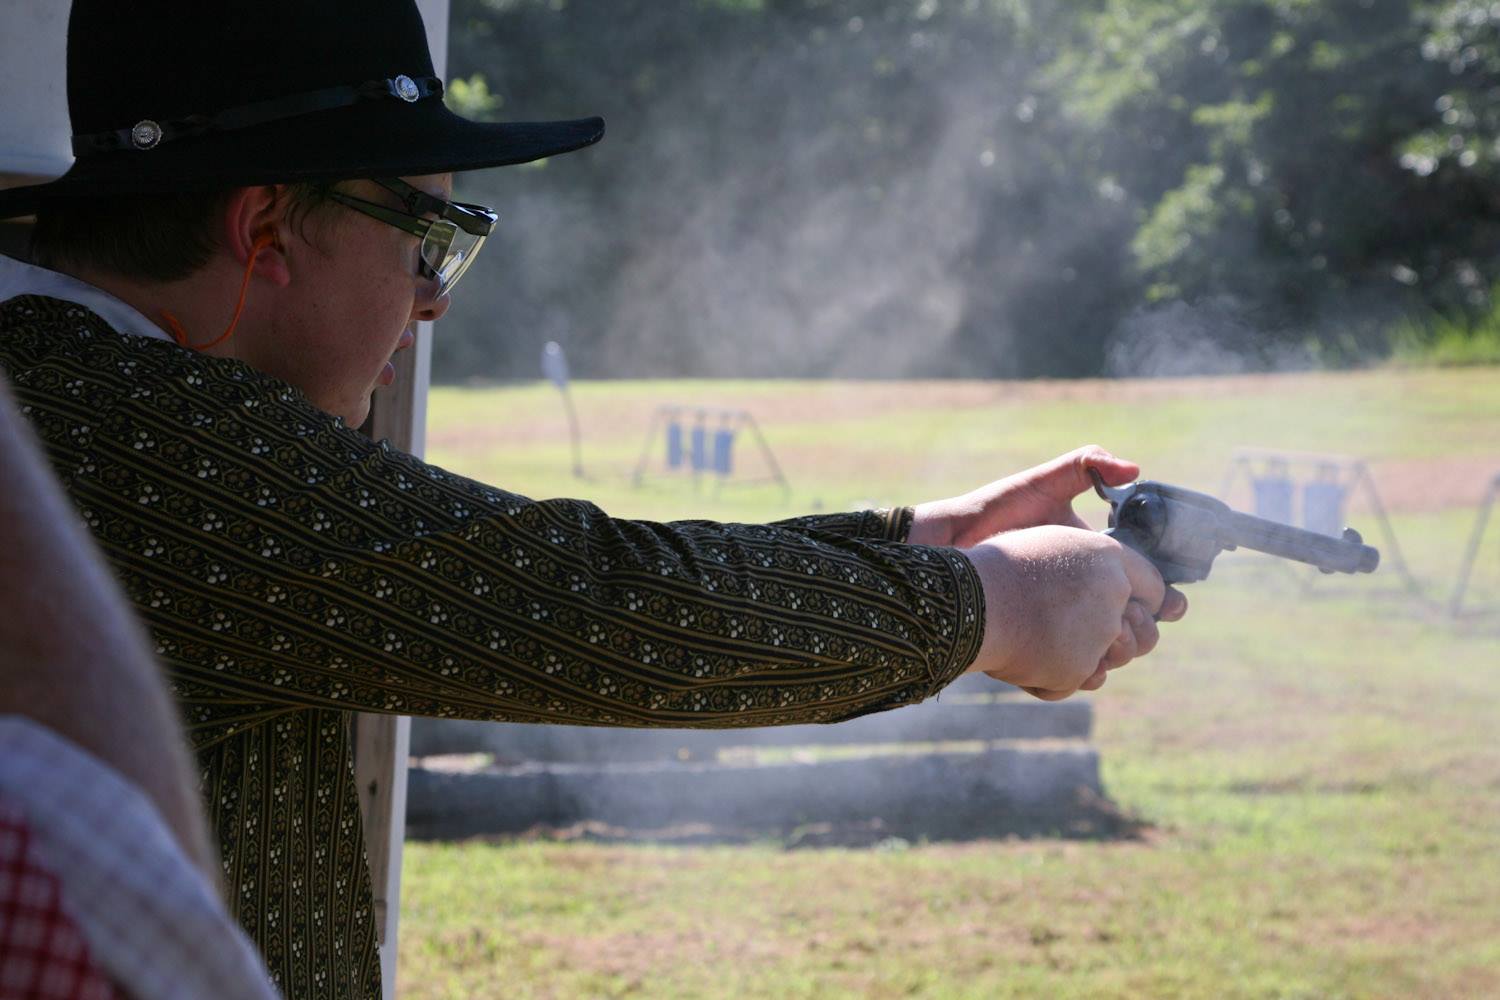 Young boy firing a rimfire pistol at an outdoor shooting range.